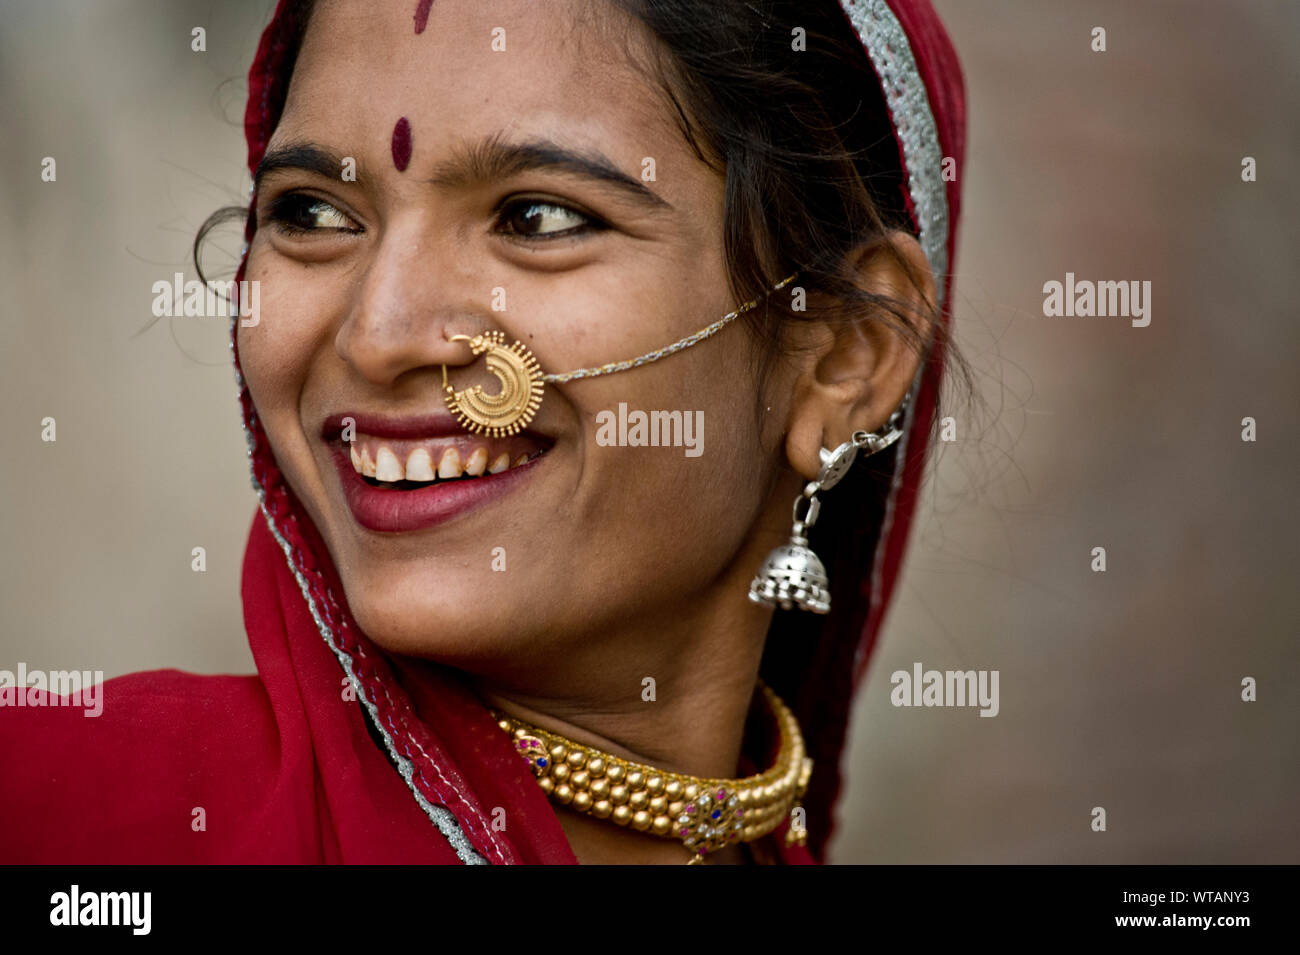 Beautiful Rajasthani woman wearing sari and traditional jewelry Stock Photo